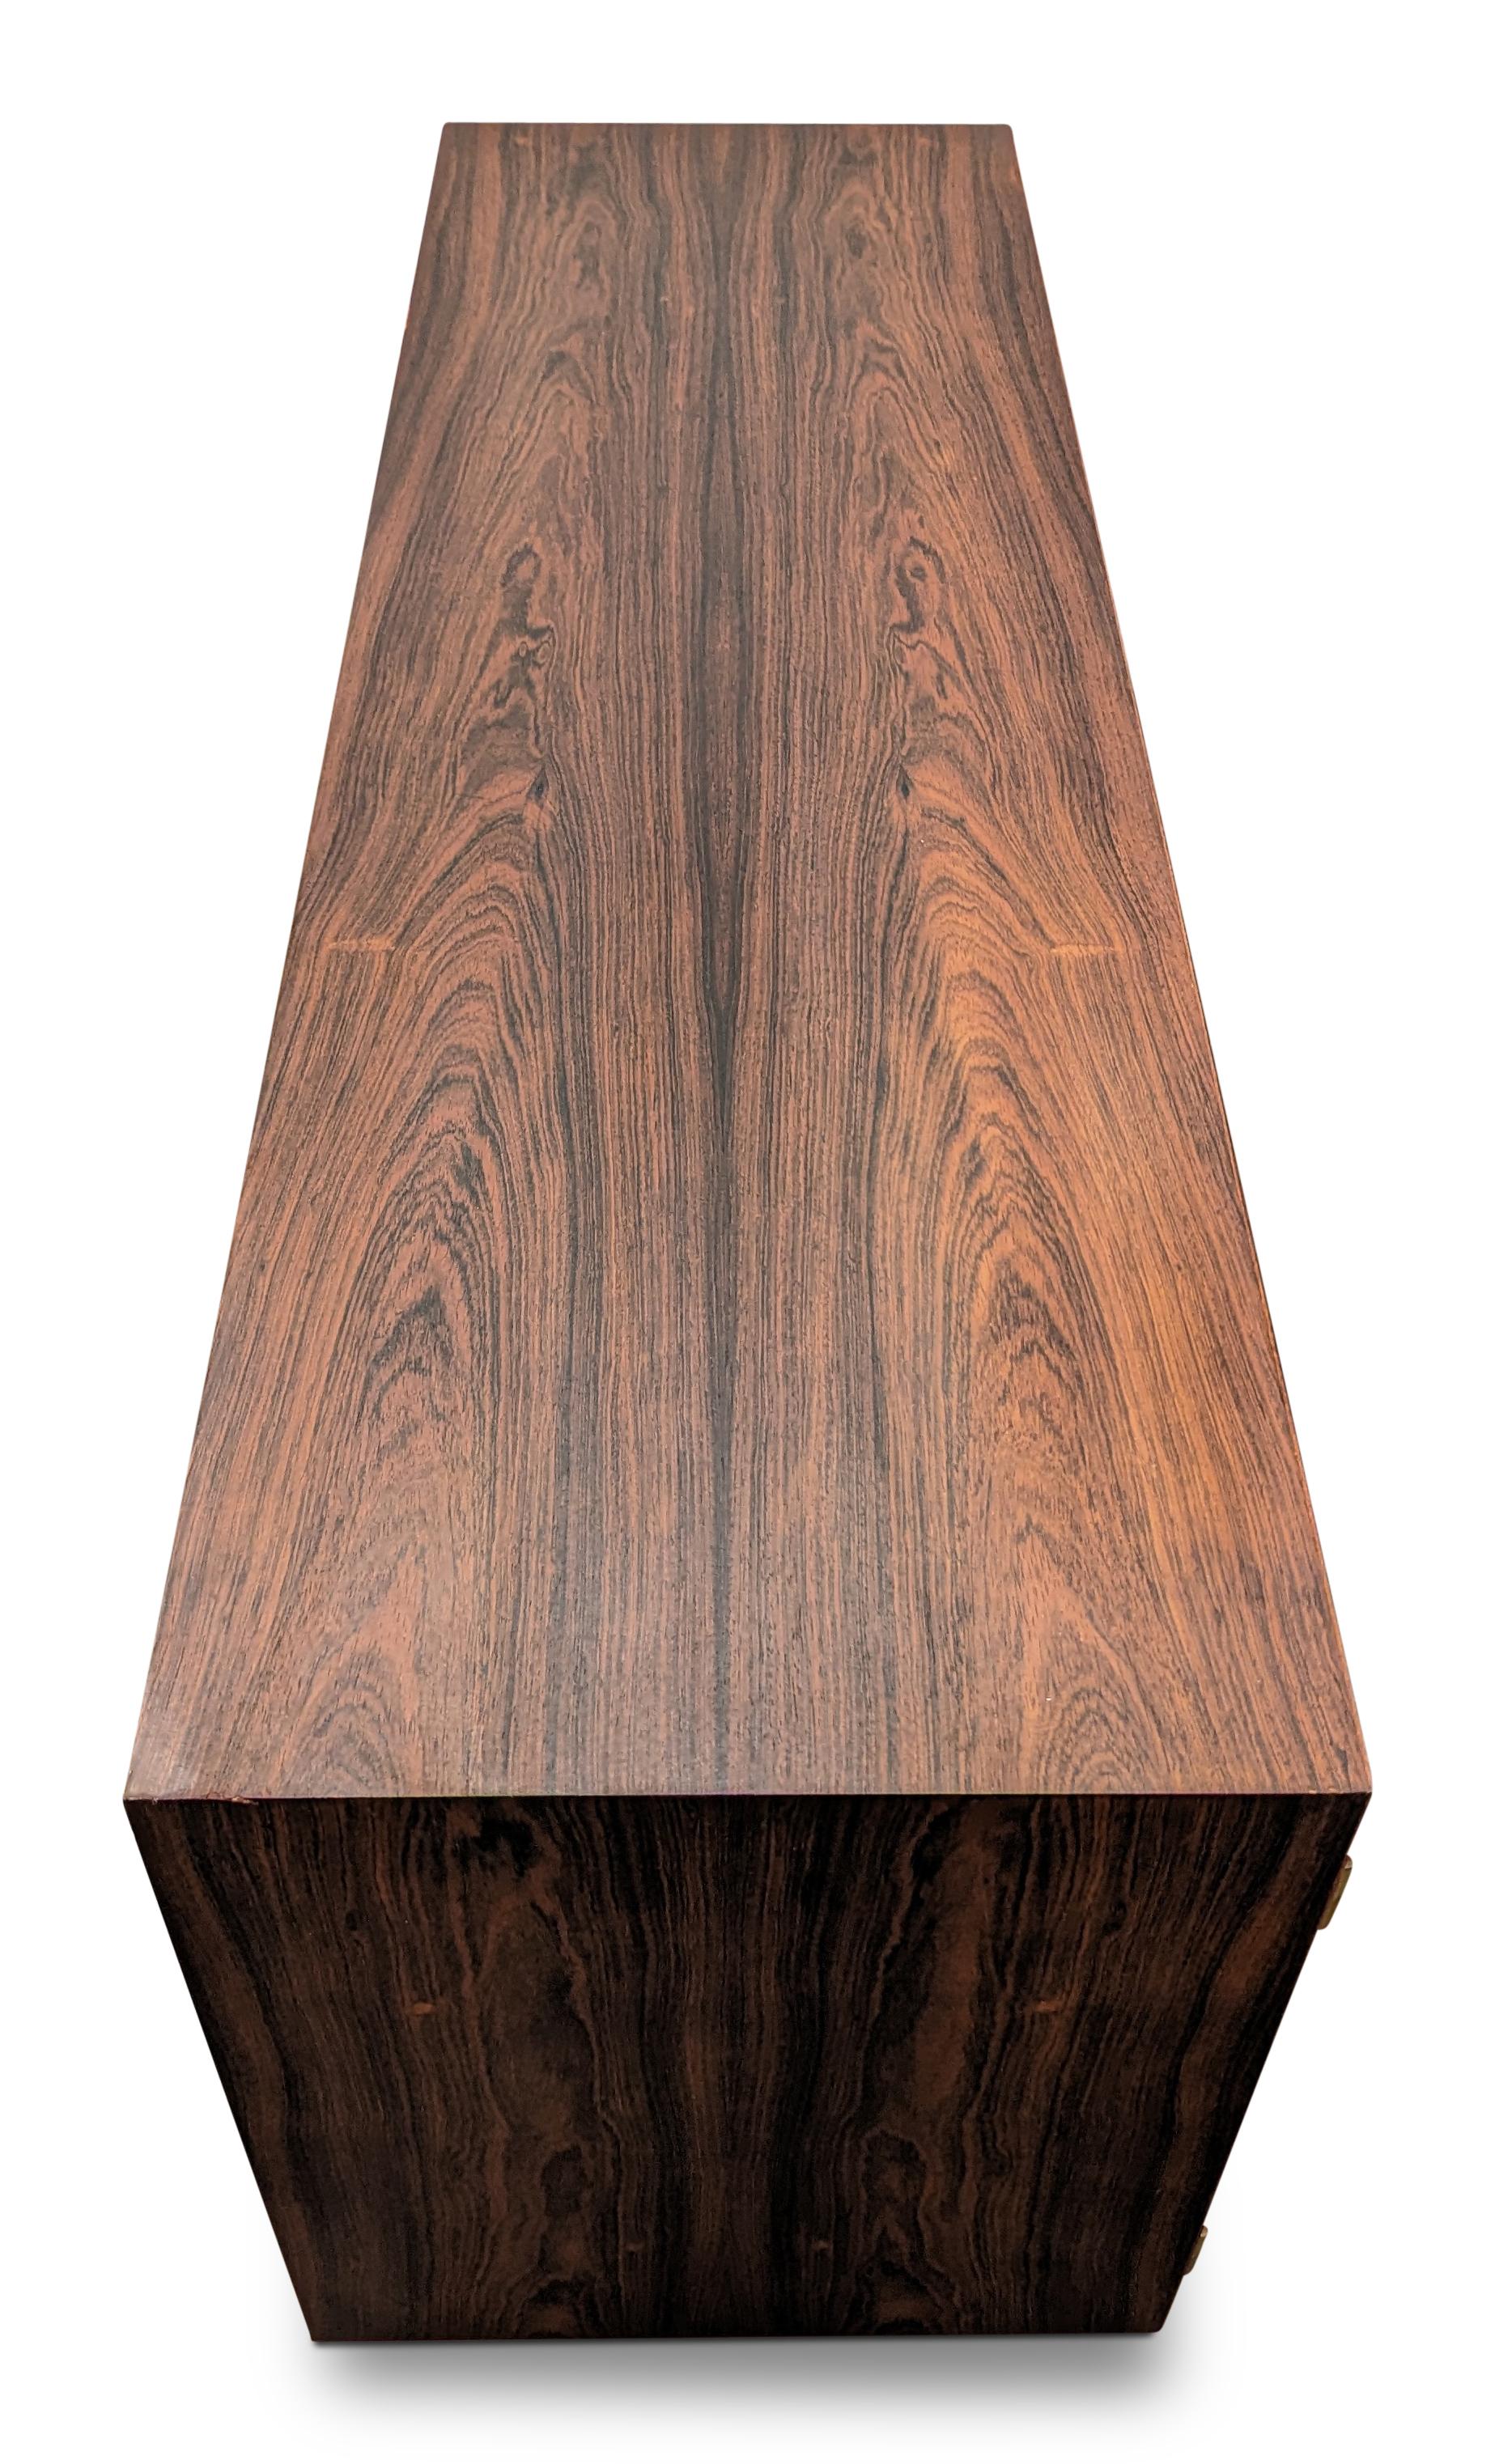 Vintage Danish Mid Century Rosewood Sideboard / Cabinet - 122363 For Sale 2